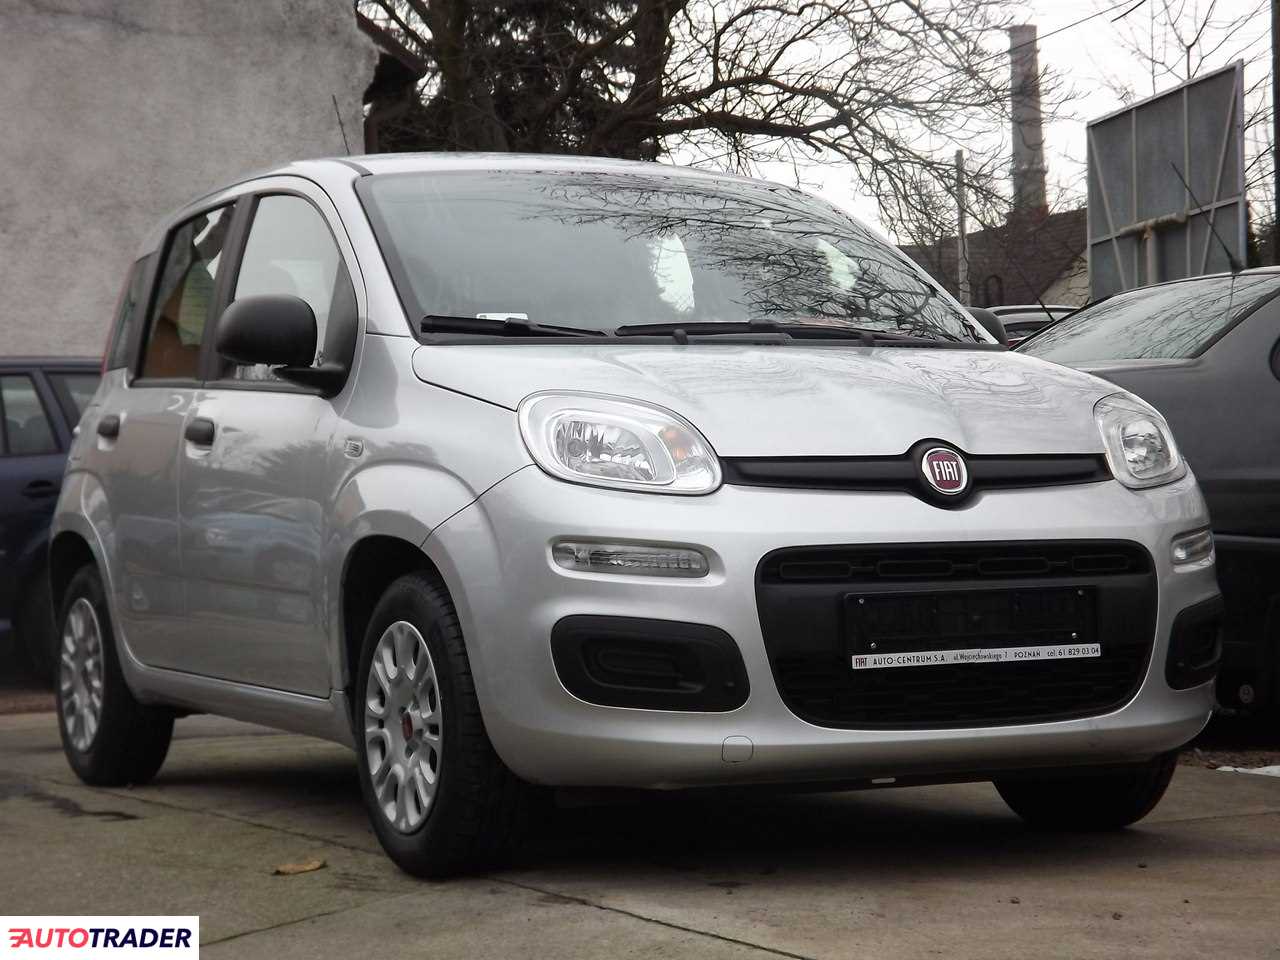 Fiat Panda 1.2 benzyna 69 KM 2014r. (Skawina) Autotrader.pl